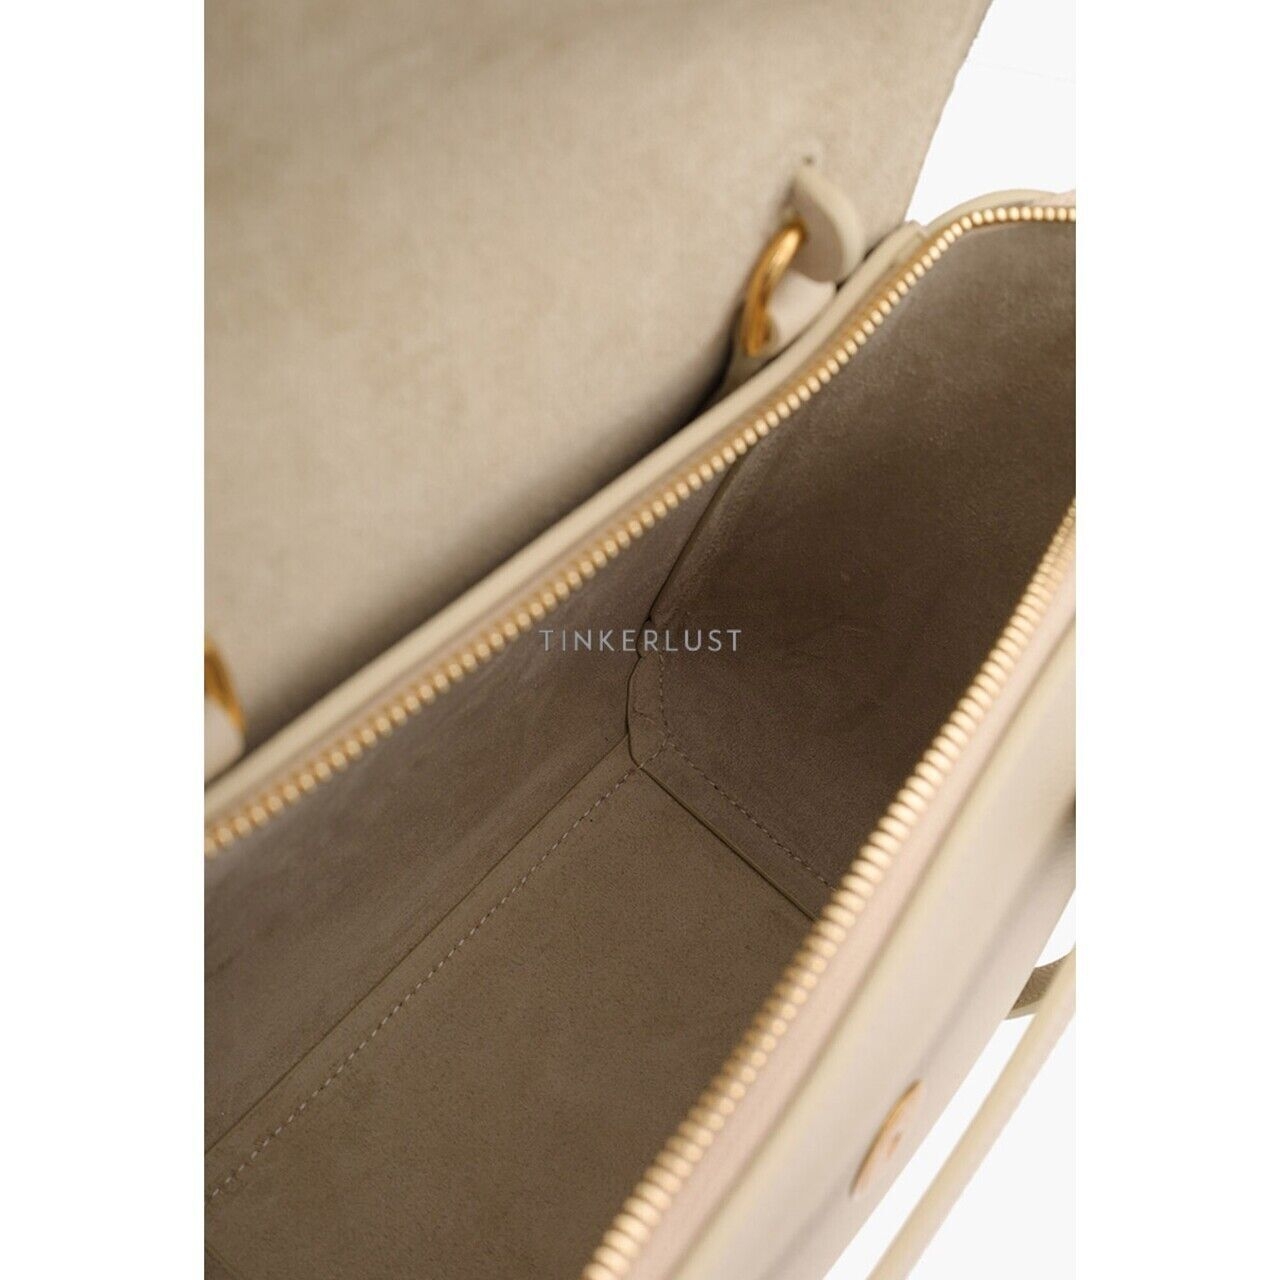 Celine Nano Belt Bag in Pampa Grained Leather Satchel